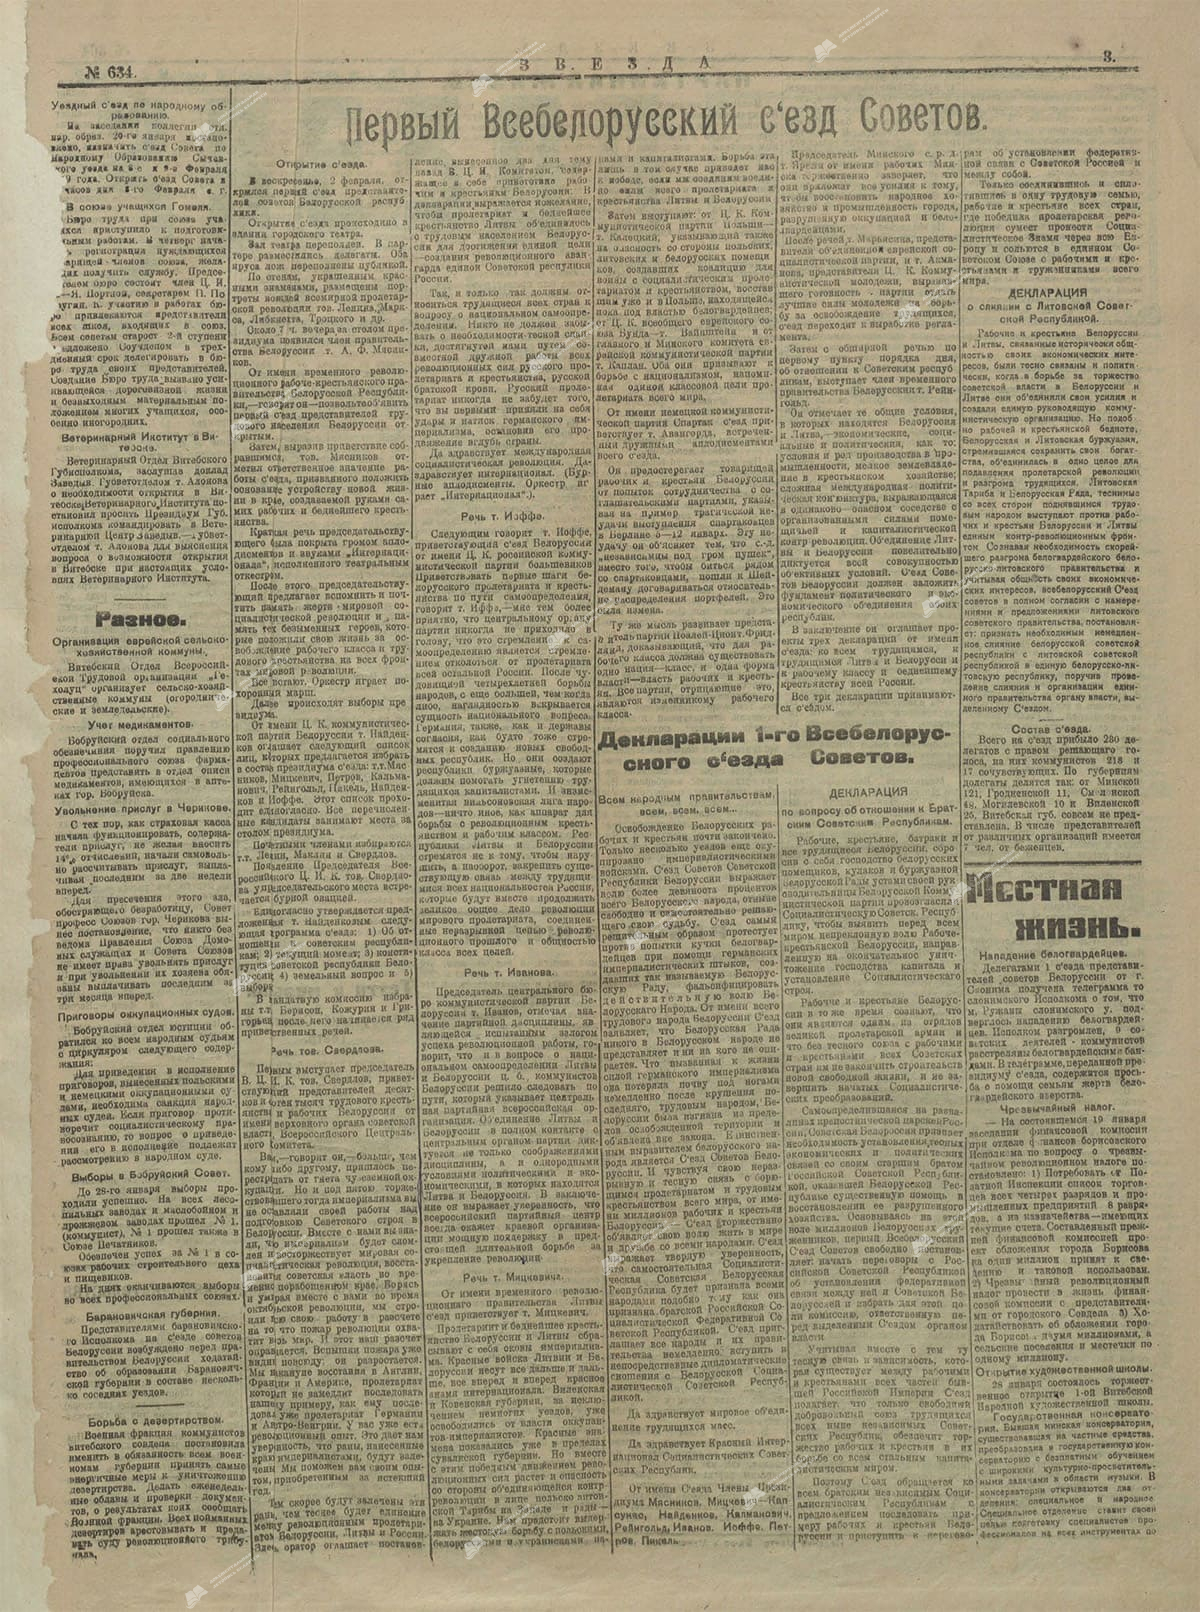 Newspaper «Star» 1919. February 4. No. 364-с. 0